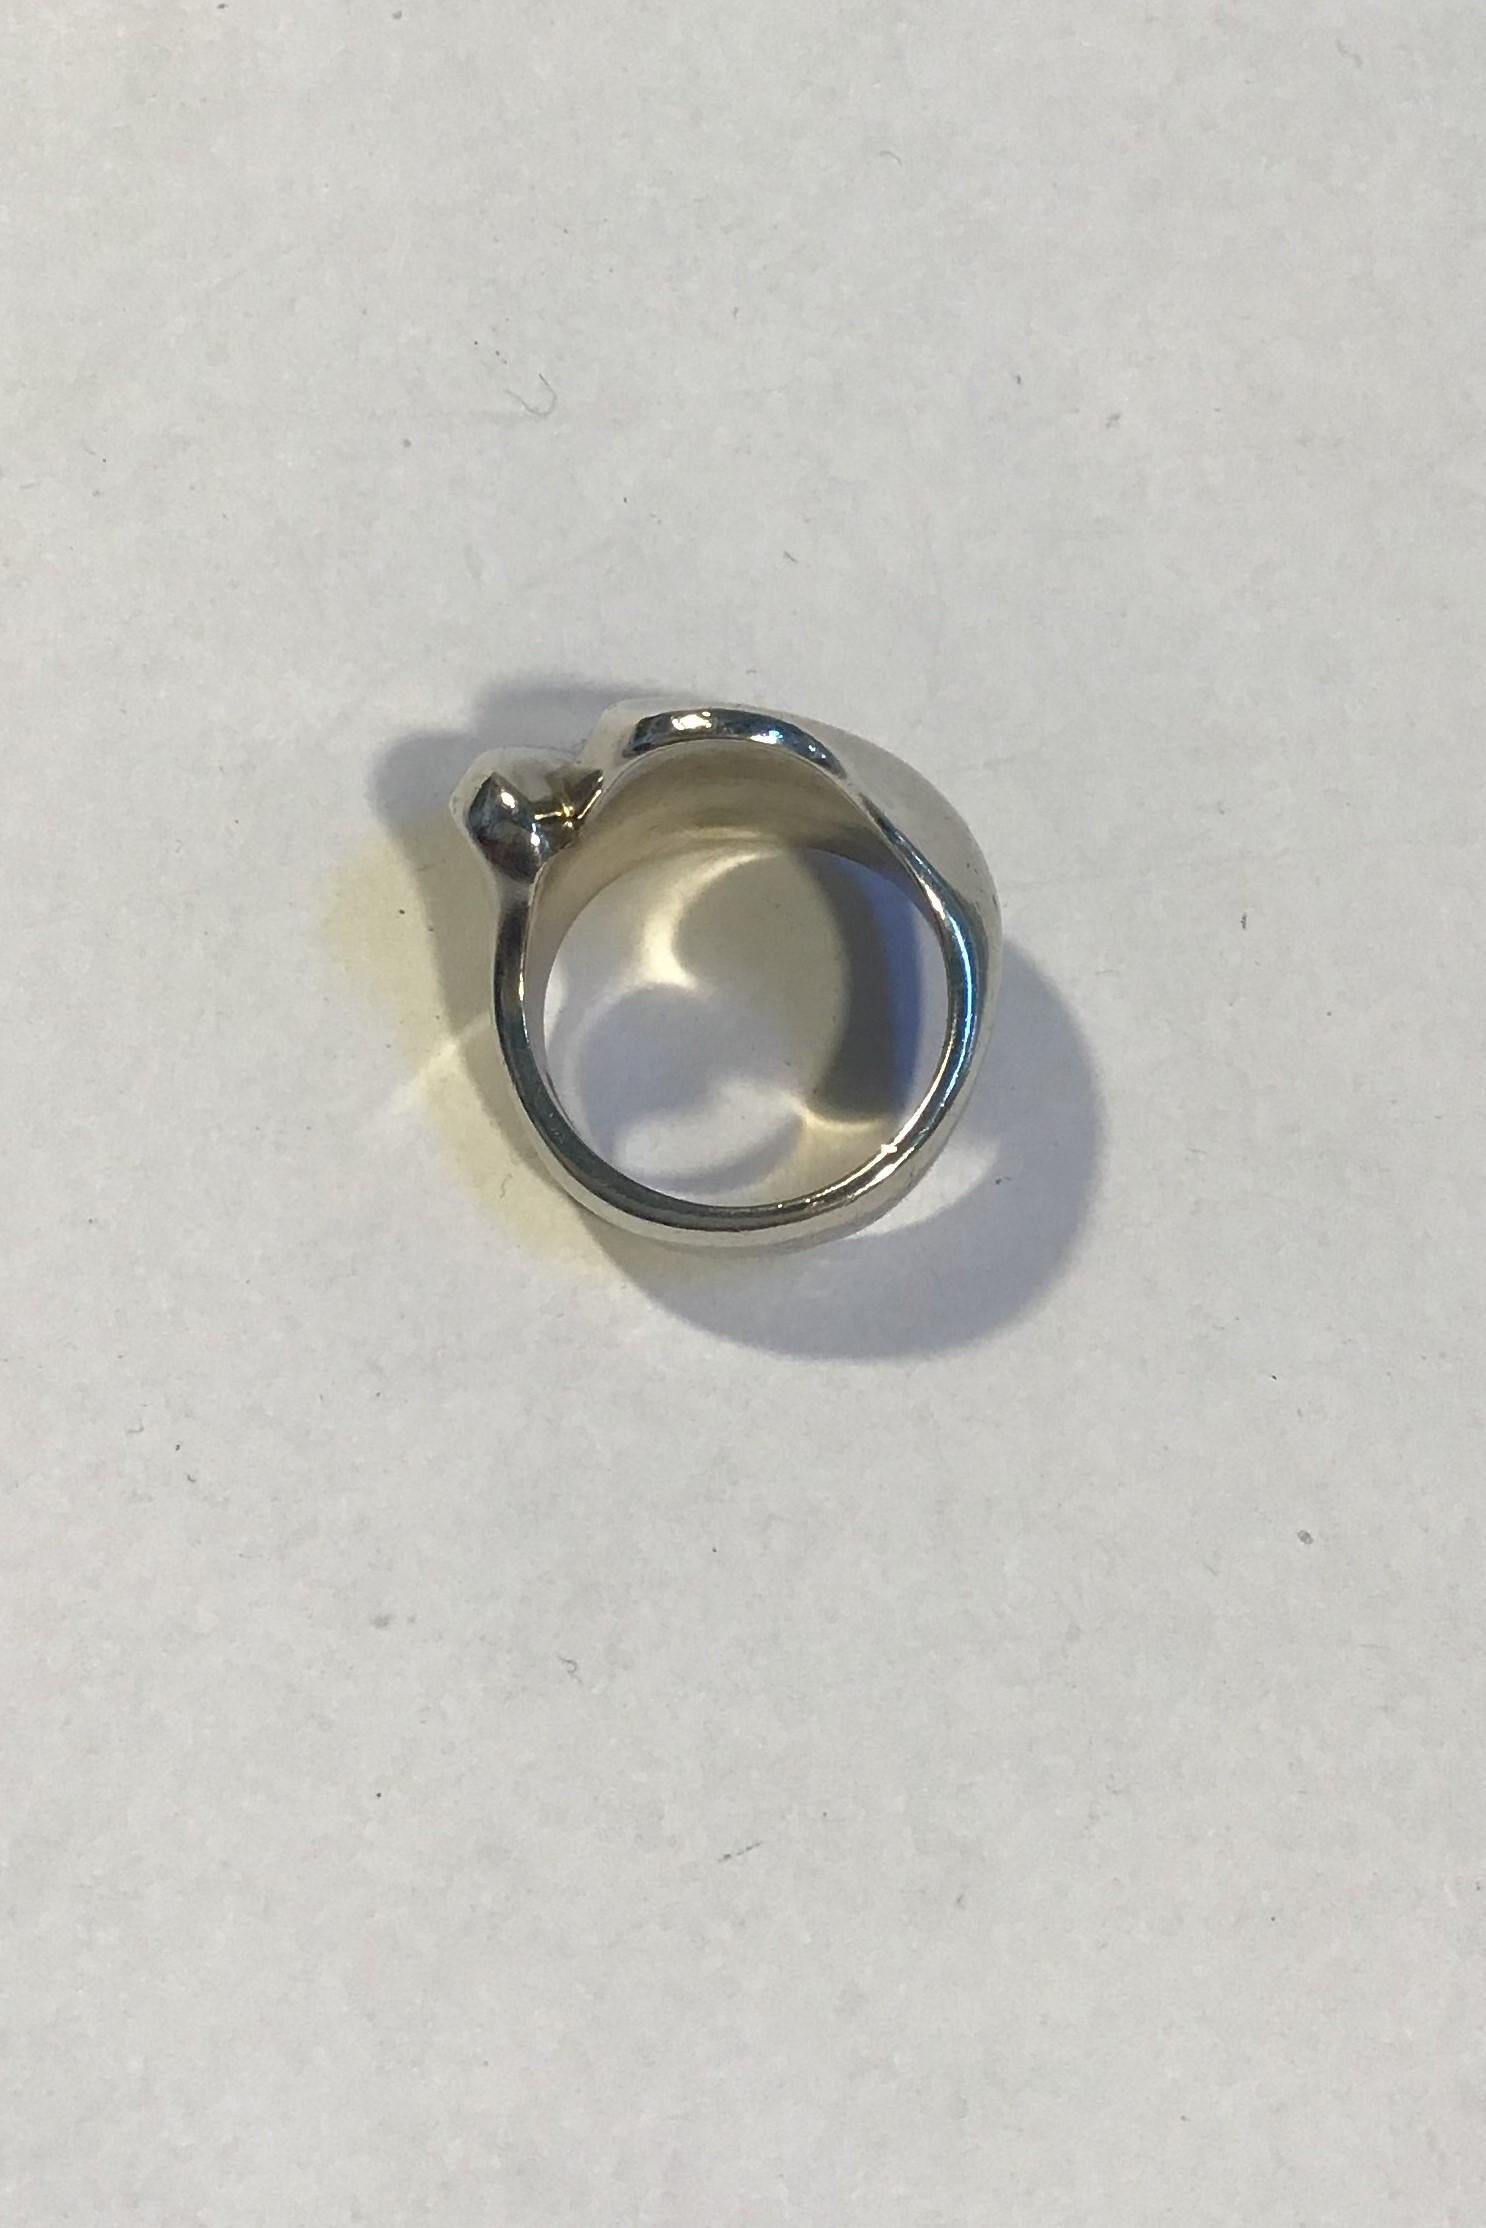 Hans Hansen(Georg Jensen) Sterling Silver Ring 

Ring size 54/US 6 3/4 
Weight 14.3 gr/0.50 oz